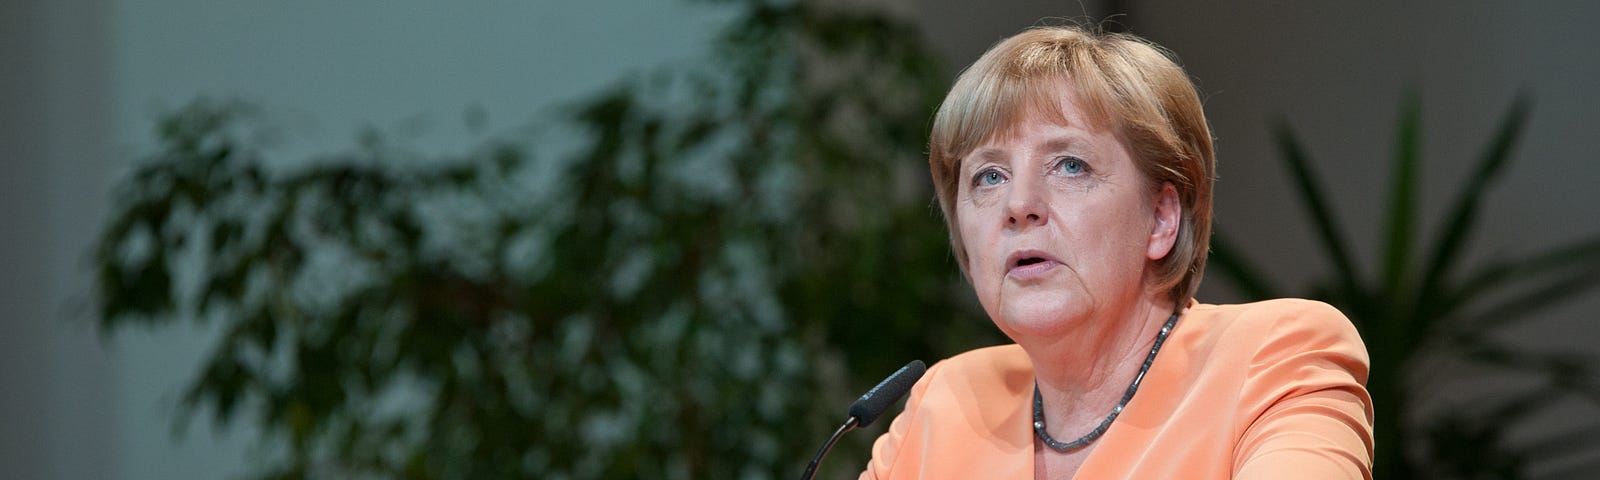 German Chancellor Angela Merkel. Image via Creative Commons.